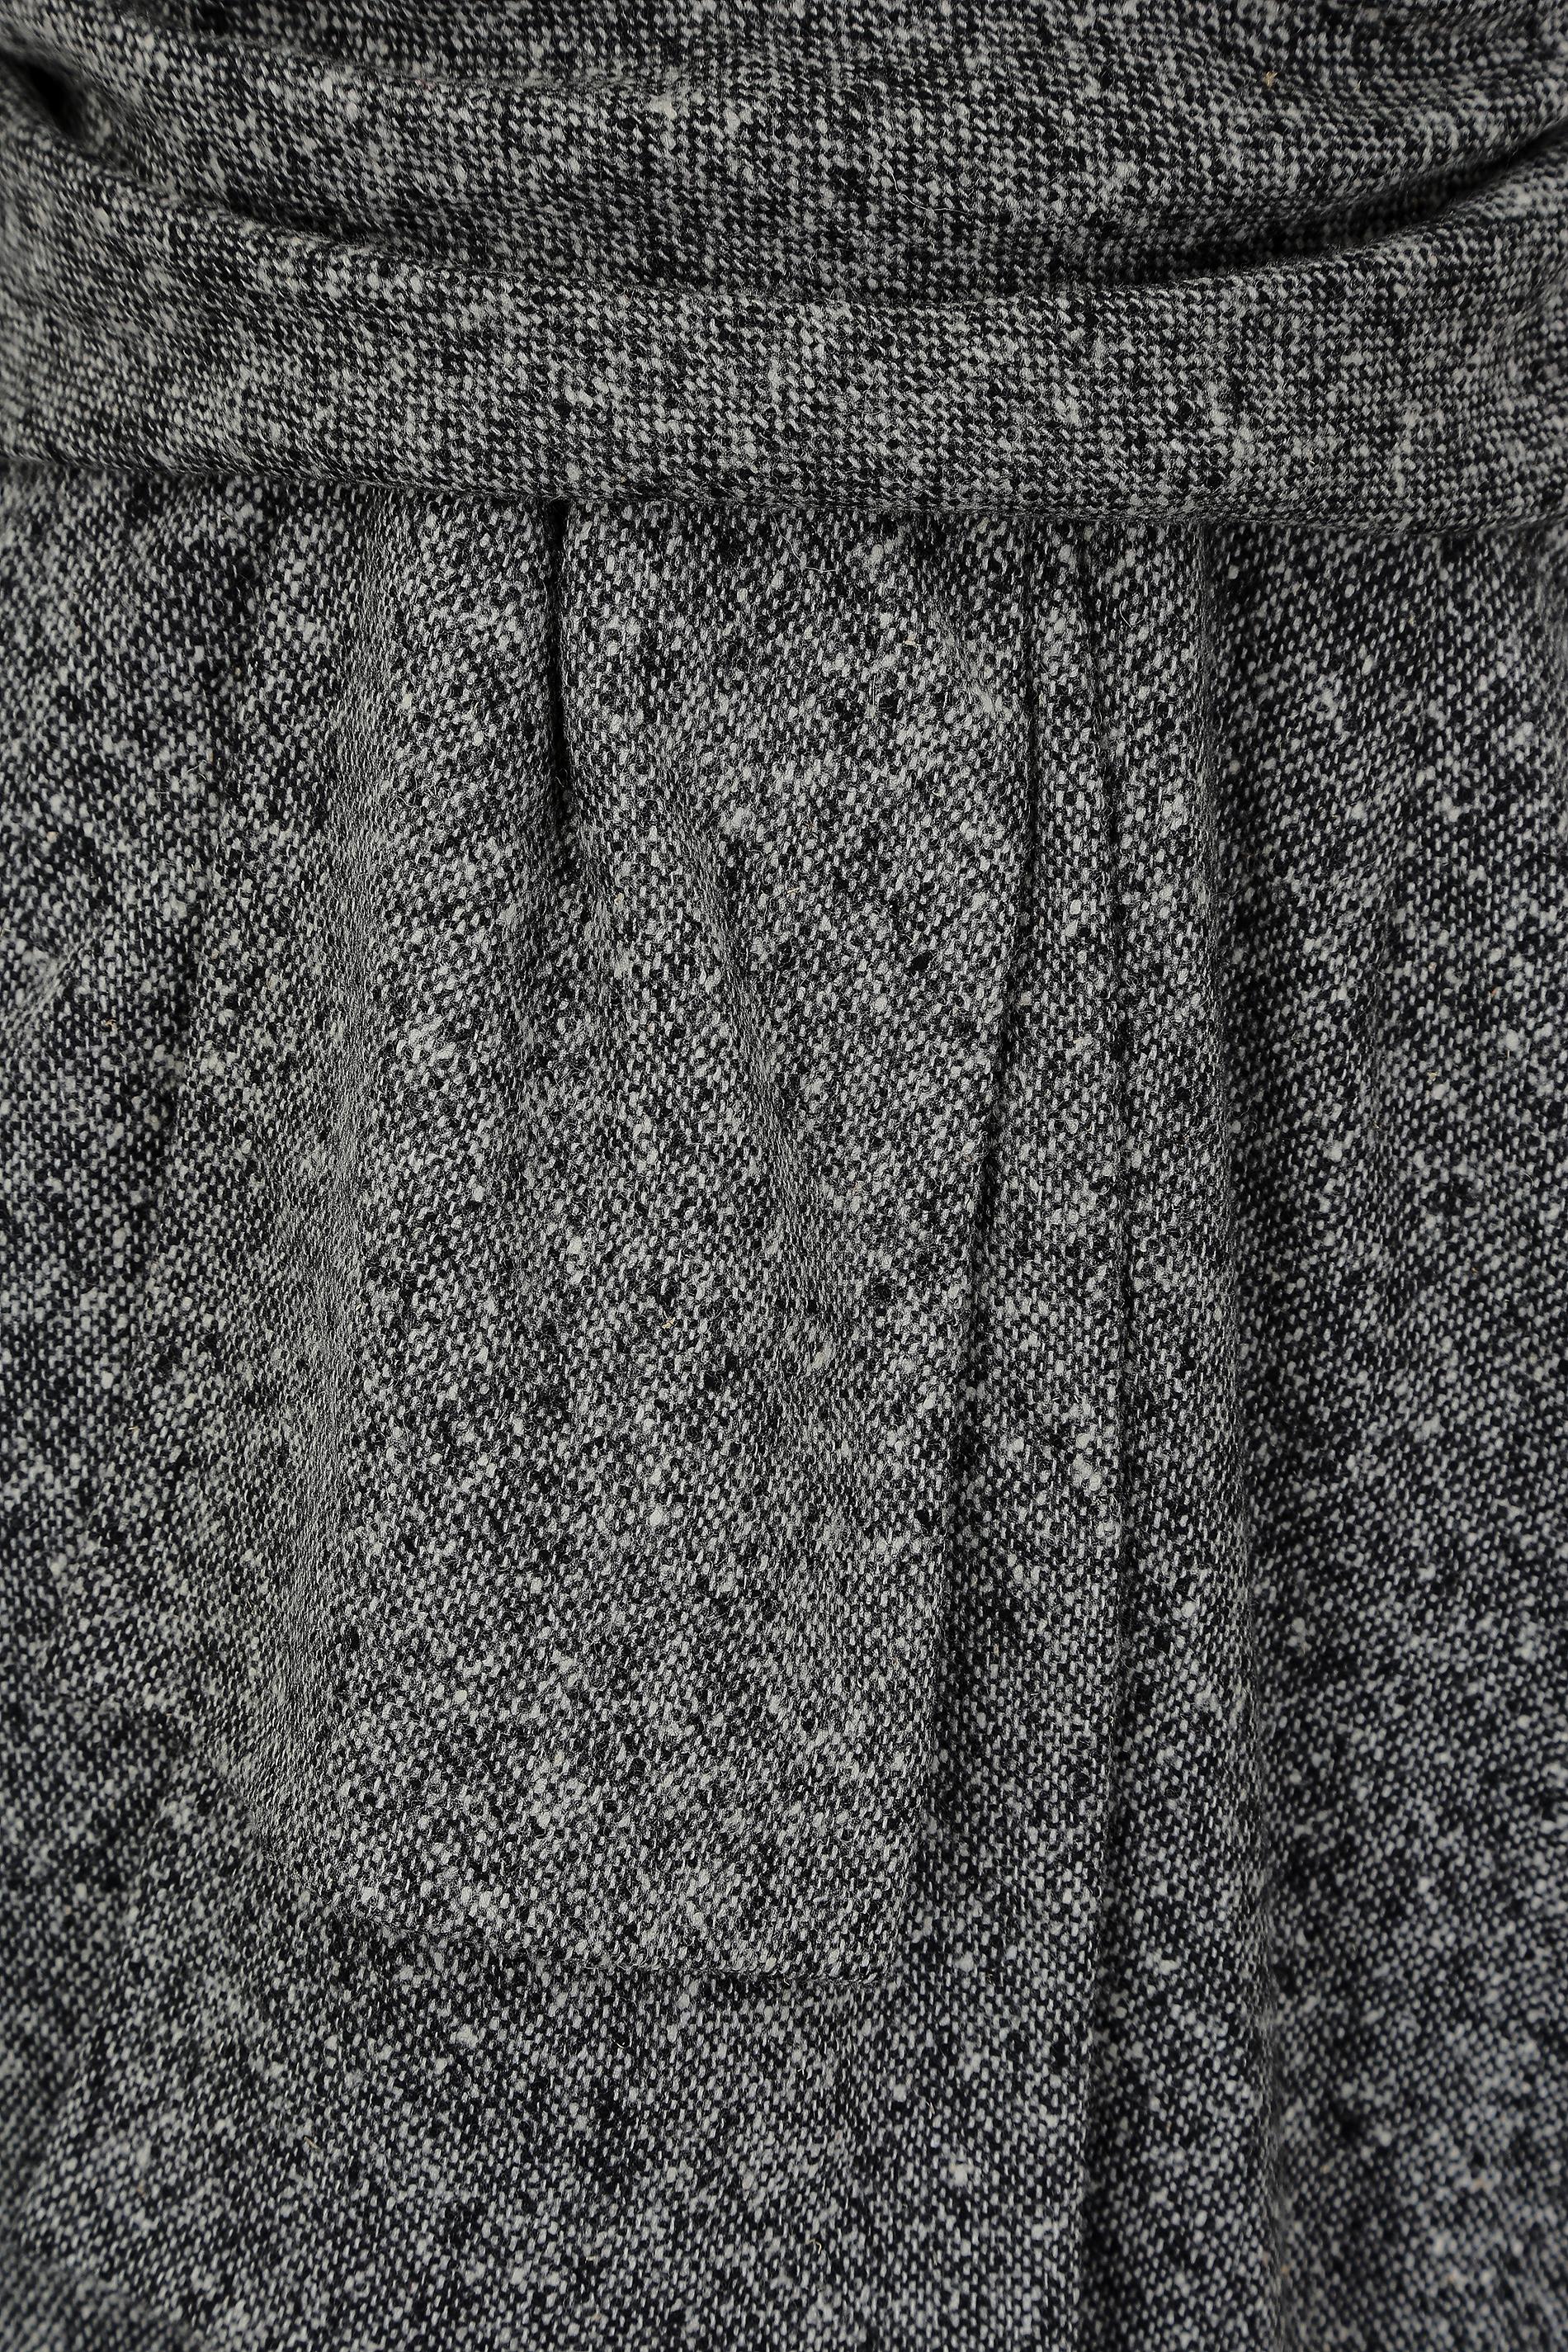 Christian Dior - Robe en tweed gris, 2007 Pour femmes en vente